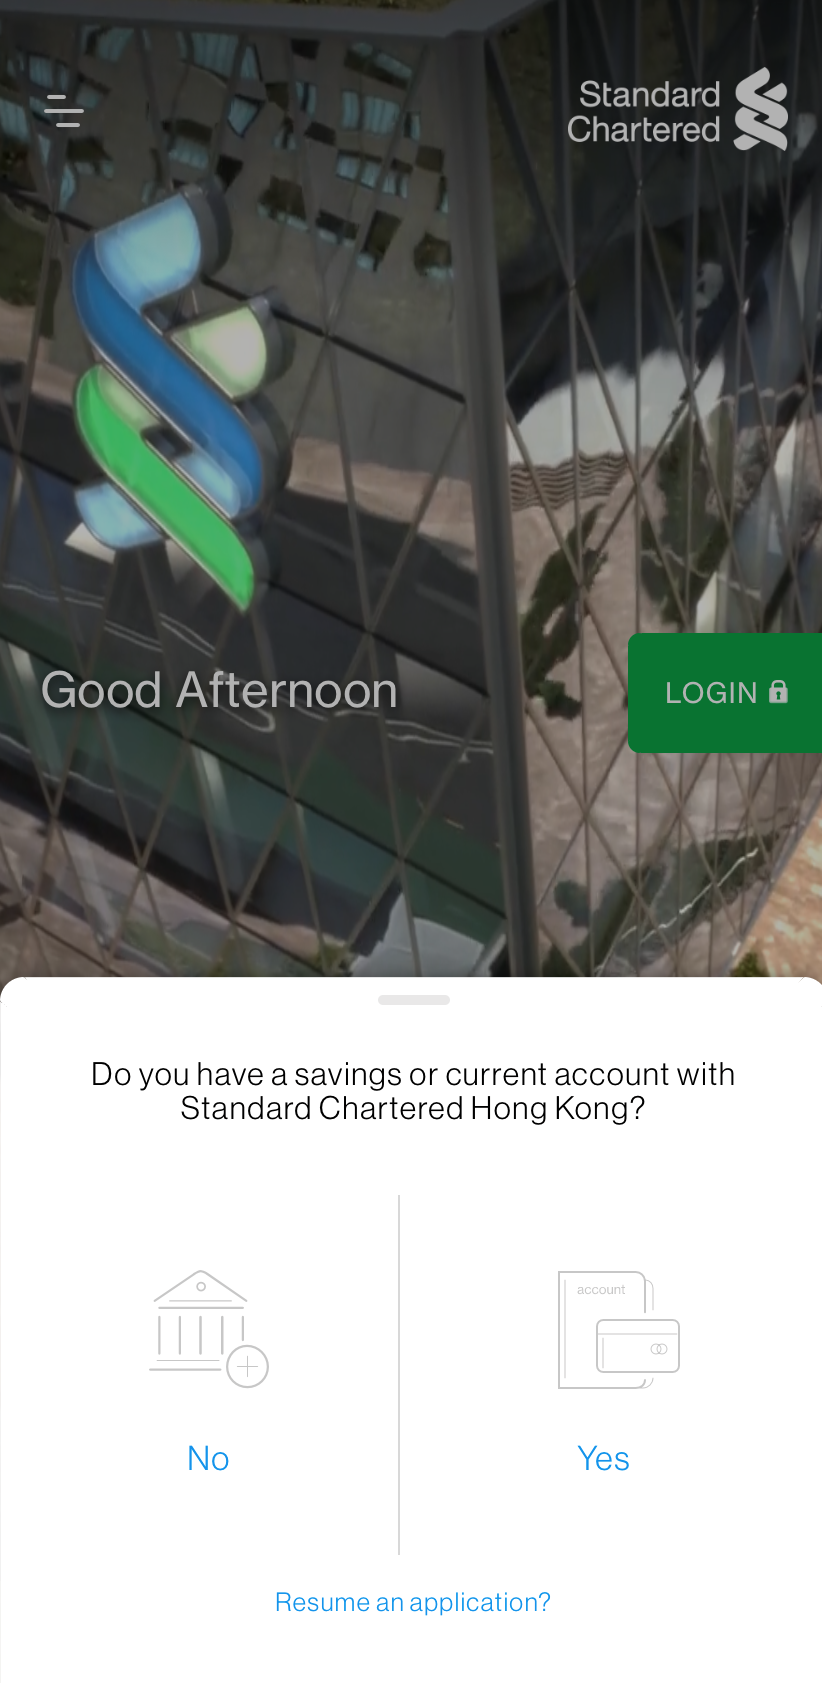 Open an account via SC Mobile App - Step 2